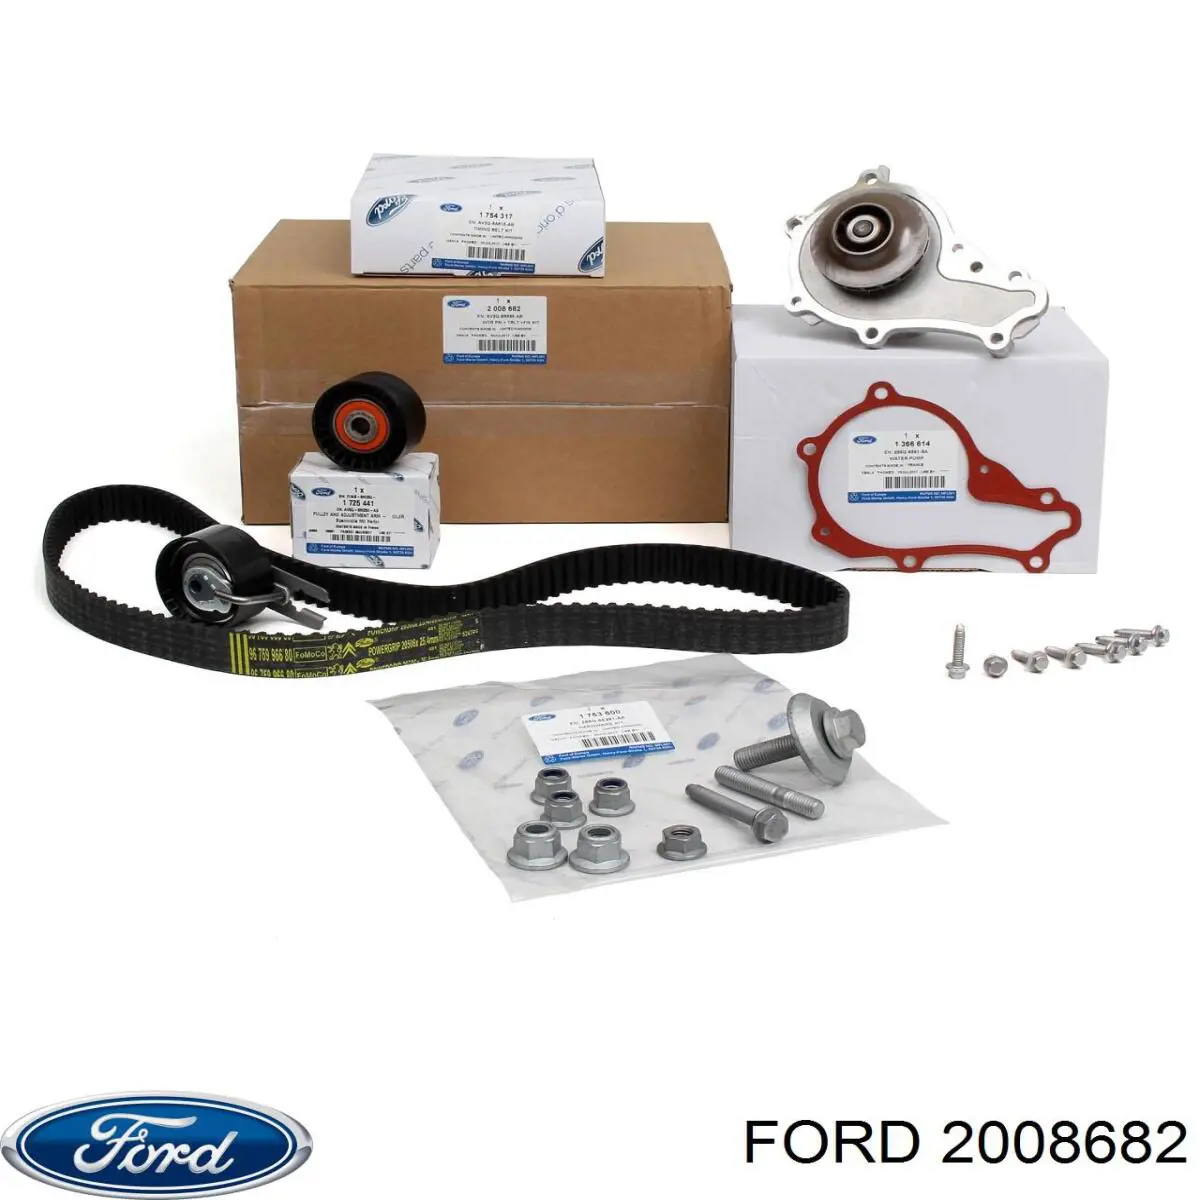 2008682 Ford комплект грм